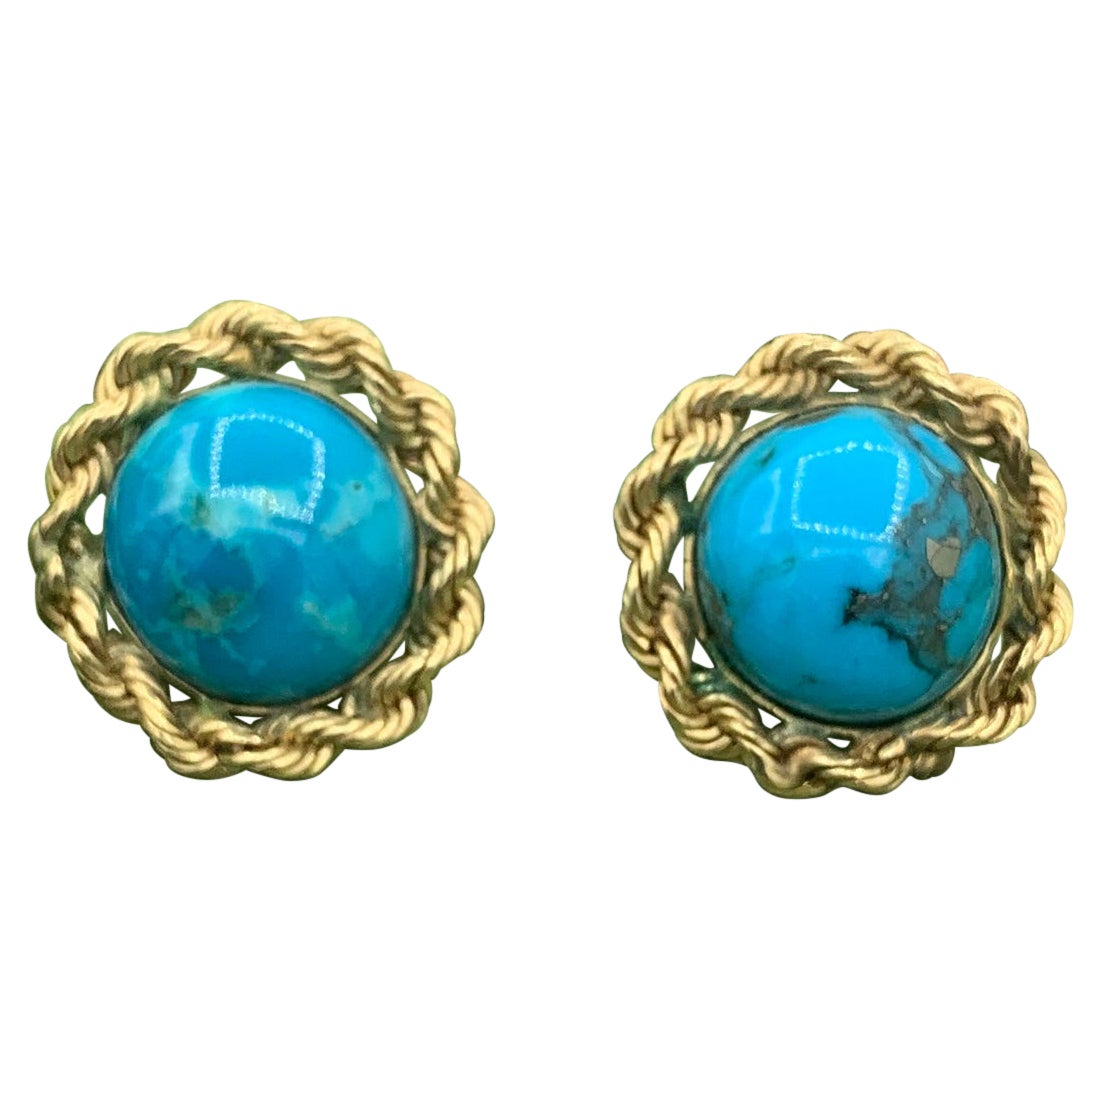 Retro Turquoise Earrings 14 Karat Gold Braided Border Mid-Century